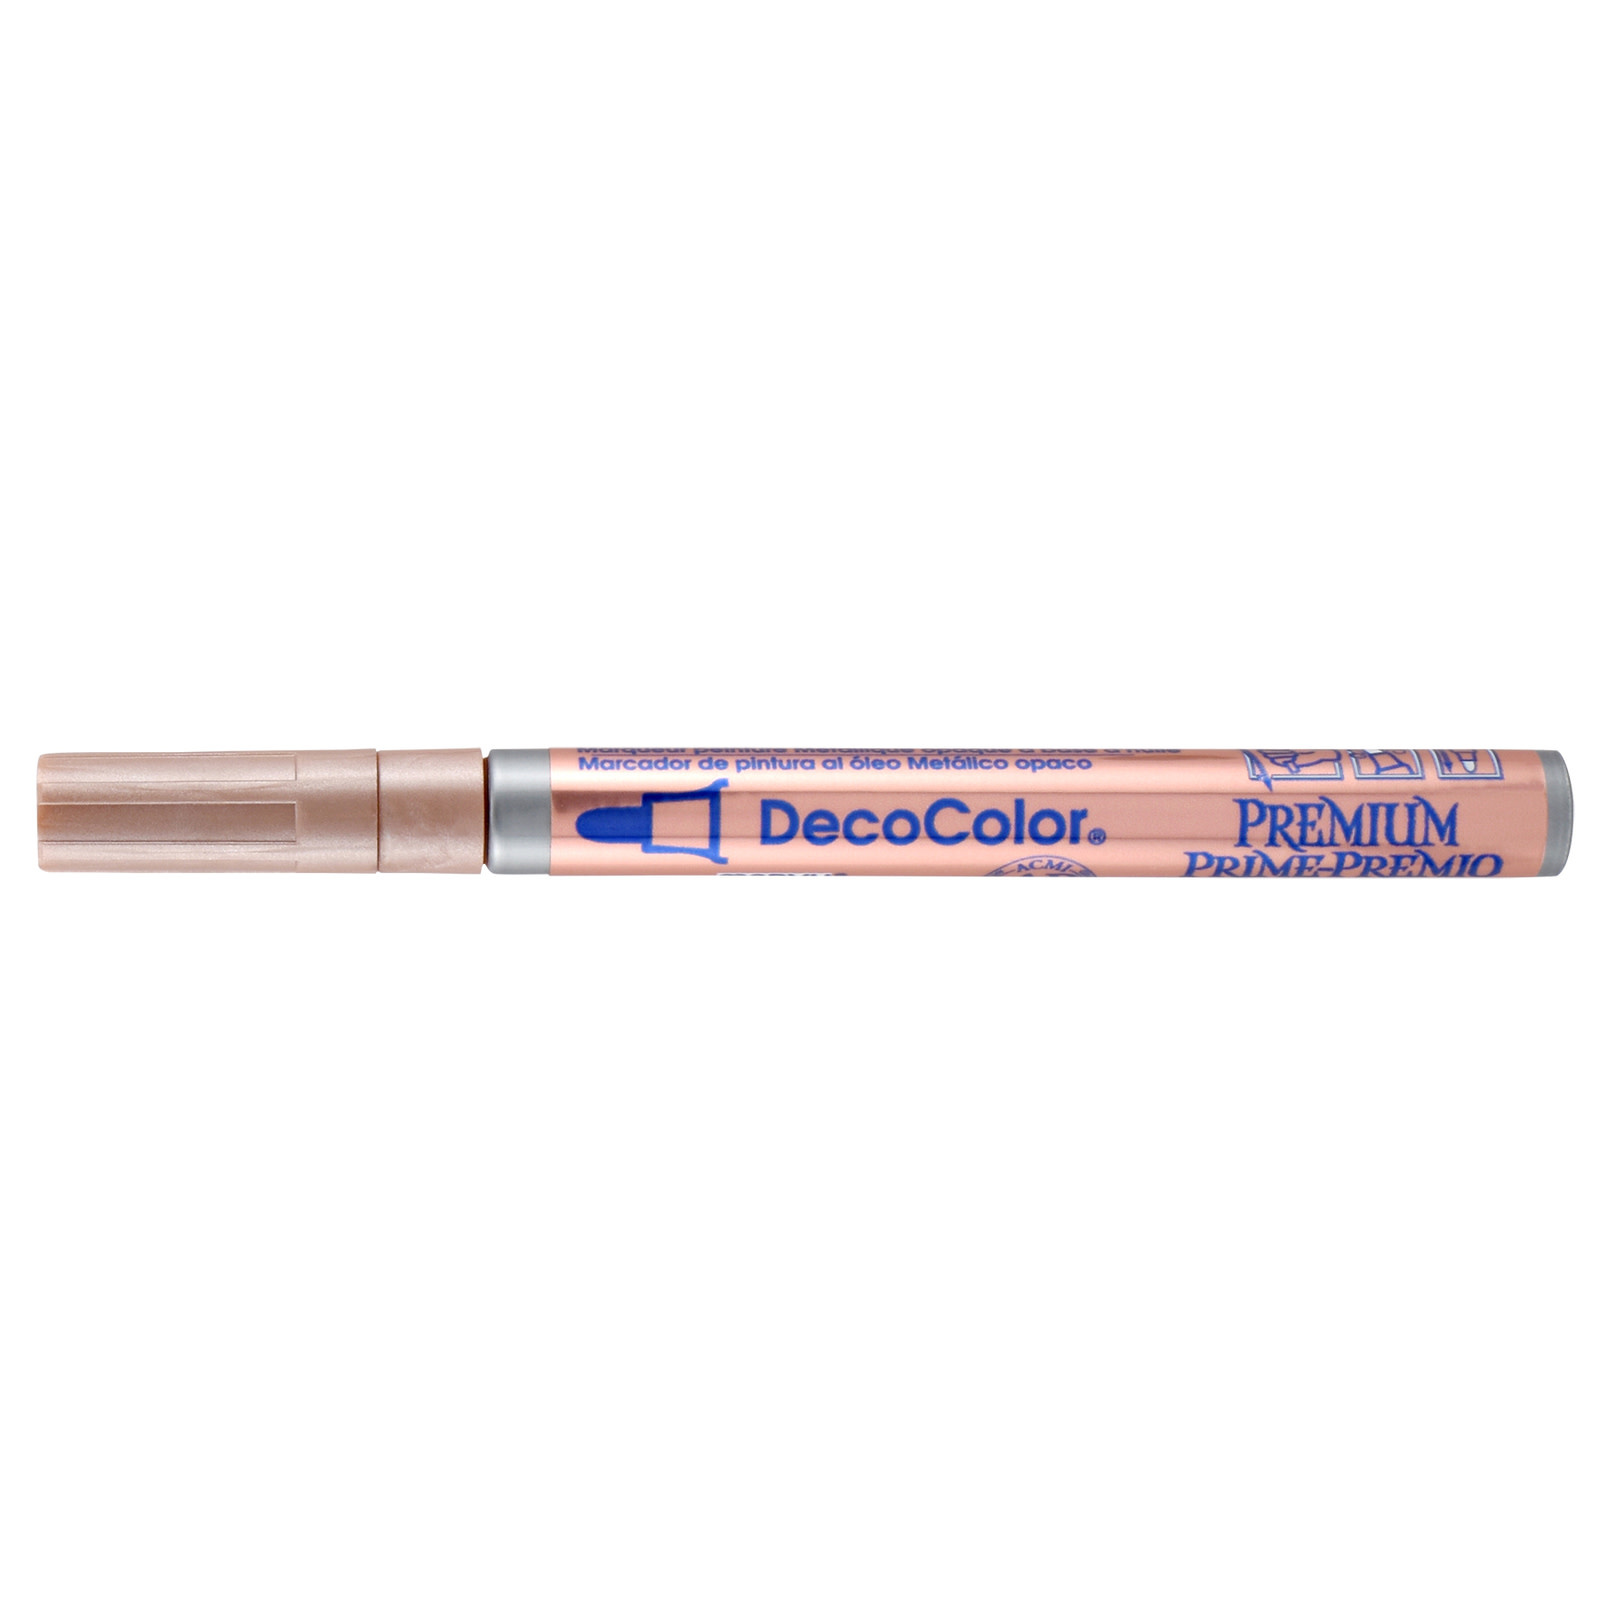 Uchida DecoColor Premium Paint Markers, 3mm Fine Tip, Rose Gold